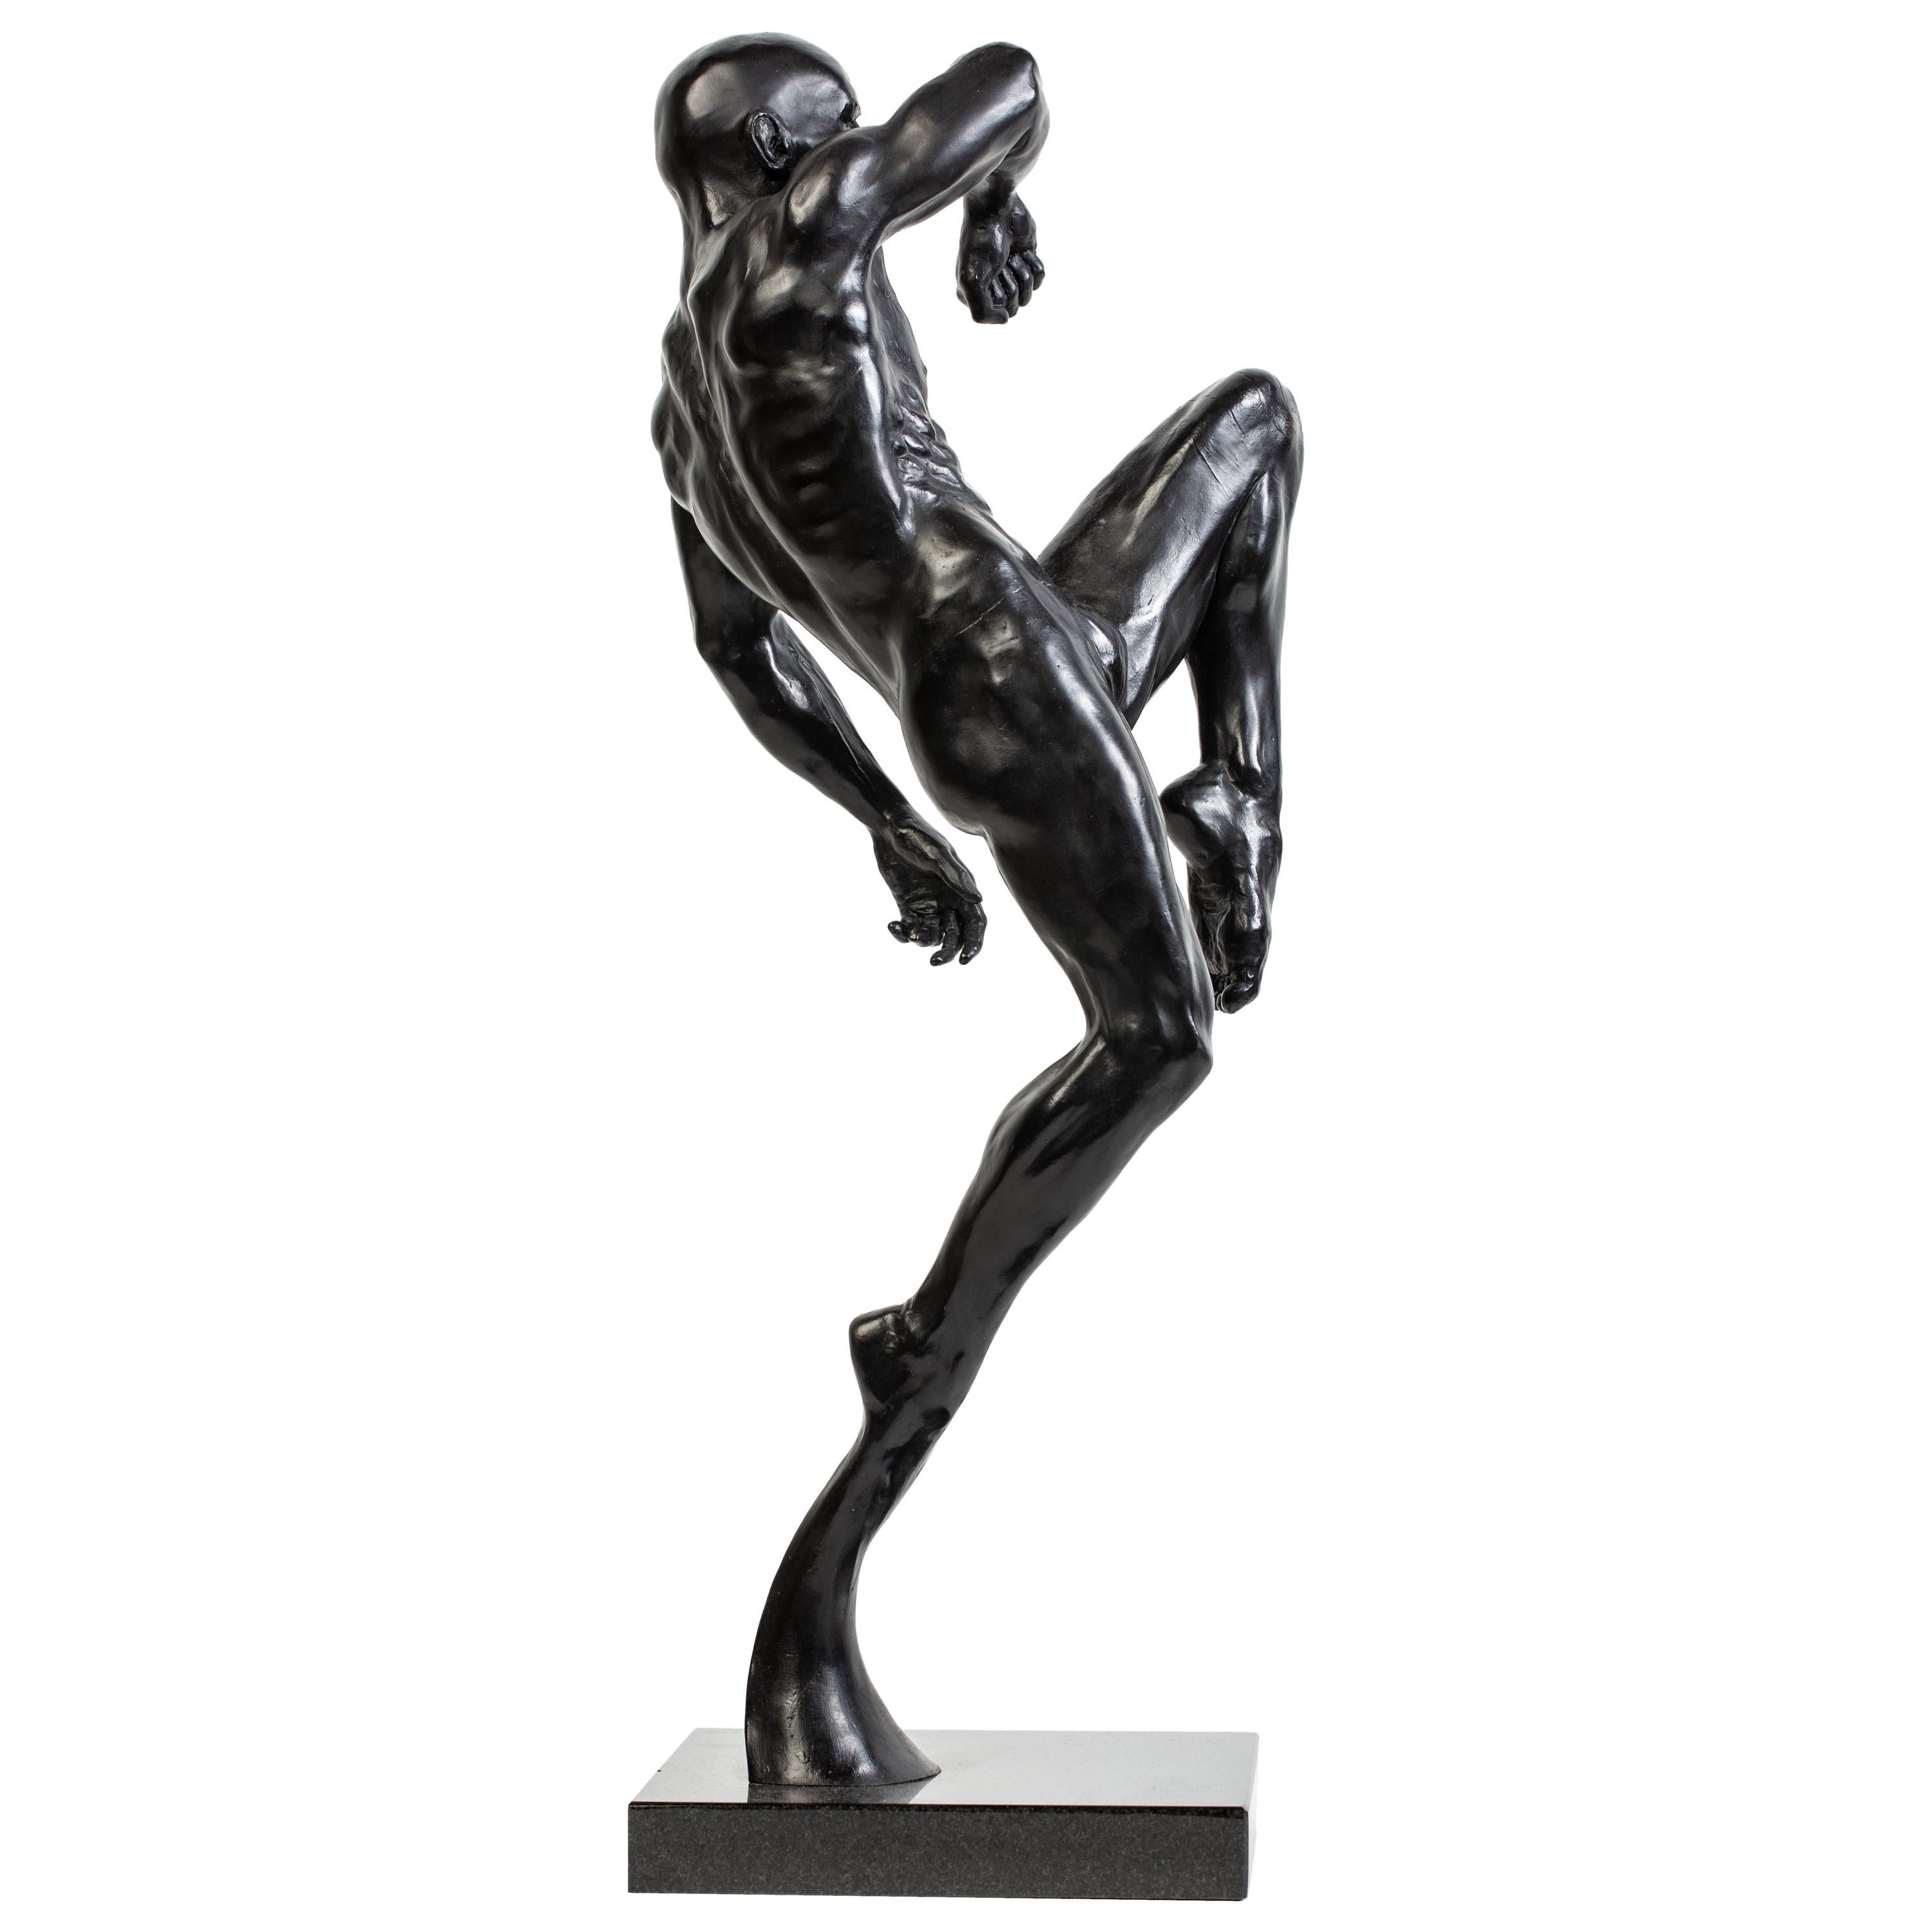 Art ancien, Figure de nu masculin athlétique, Sculpture en bronze de Dean Kugler